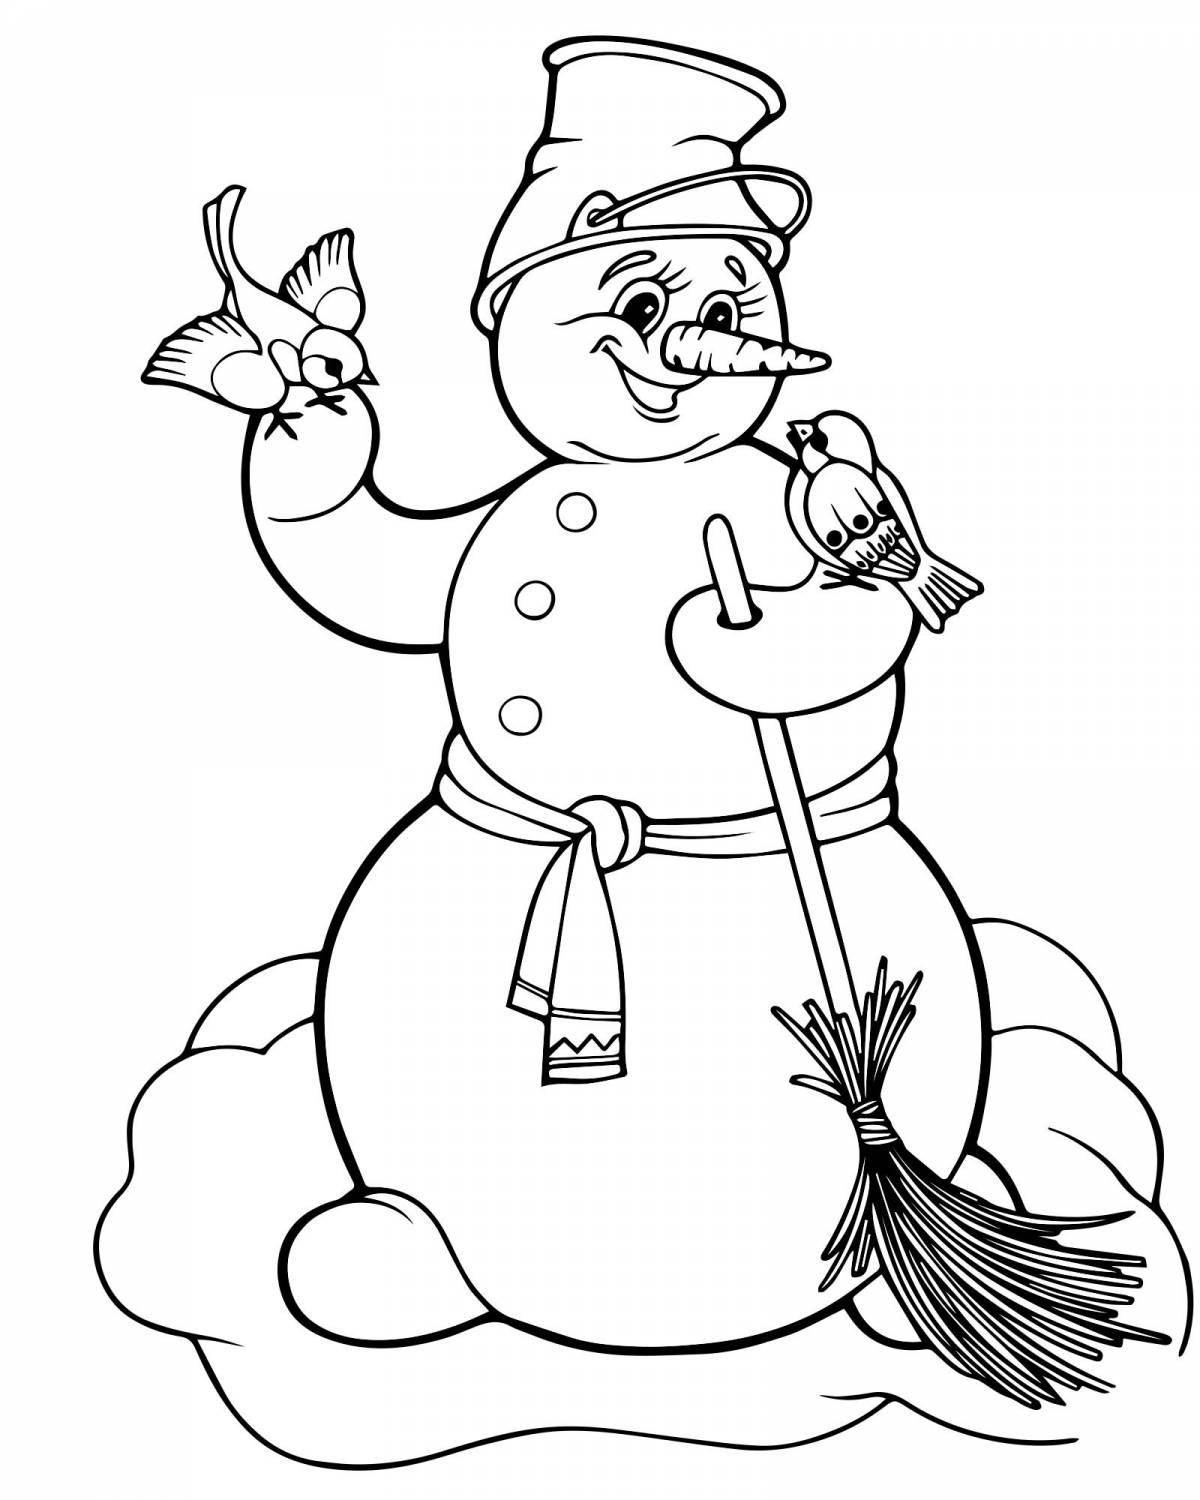 Gracious postman snowman coloring pages